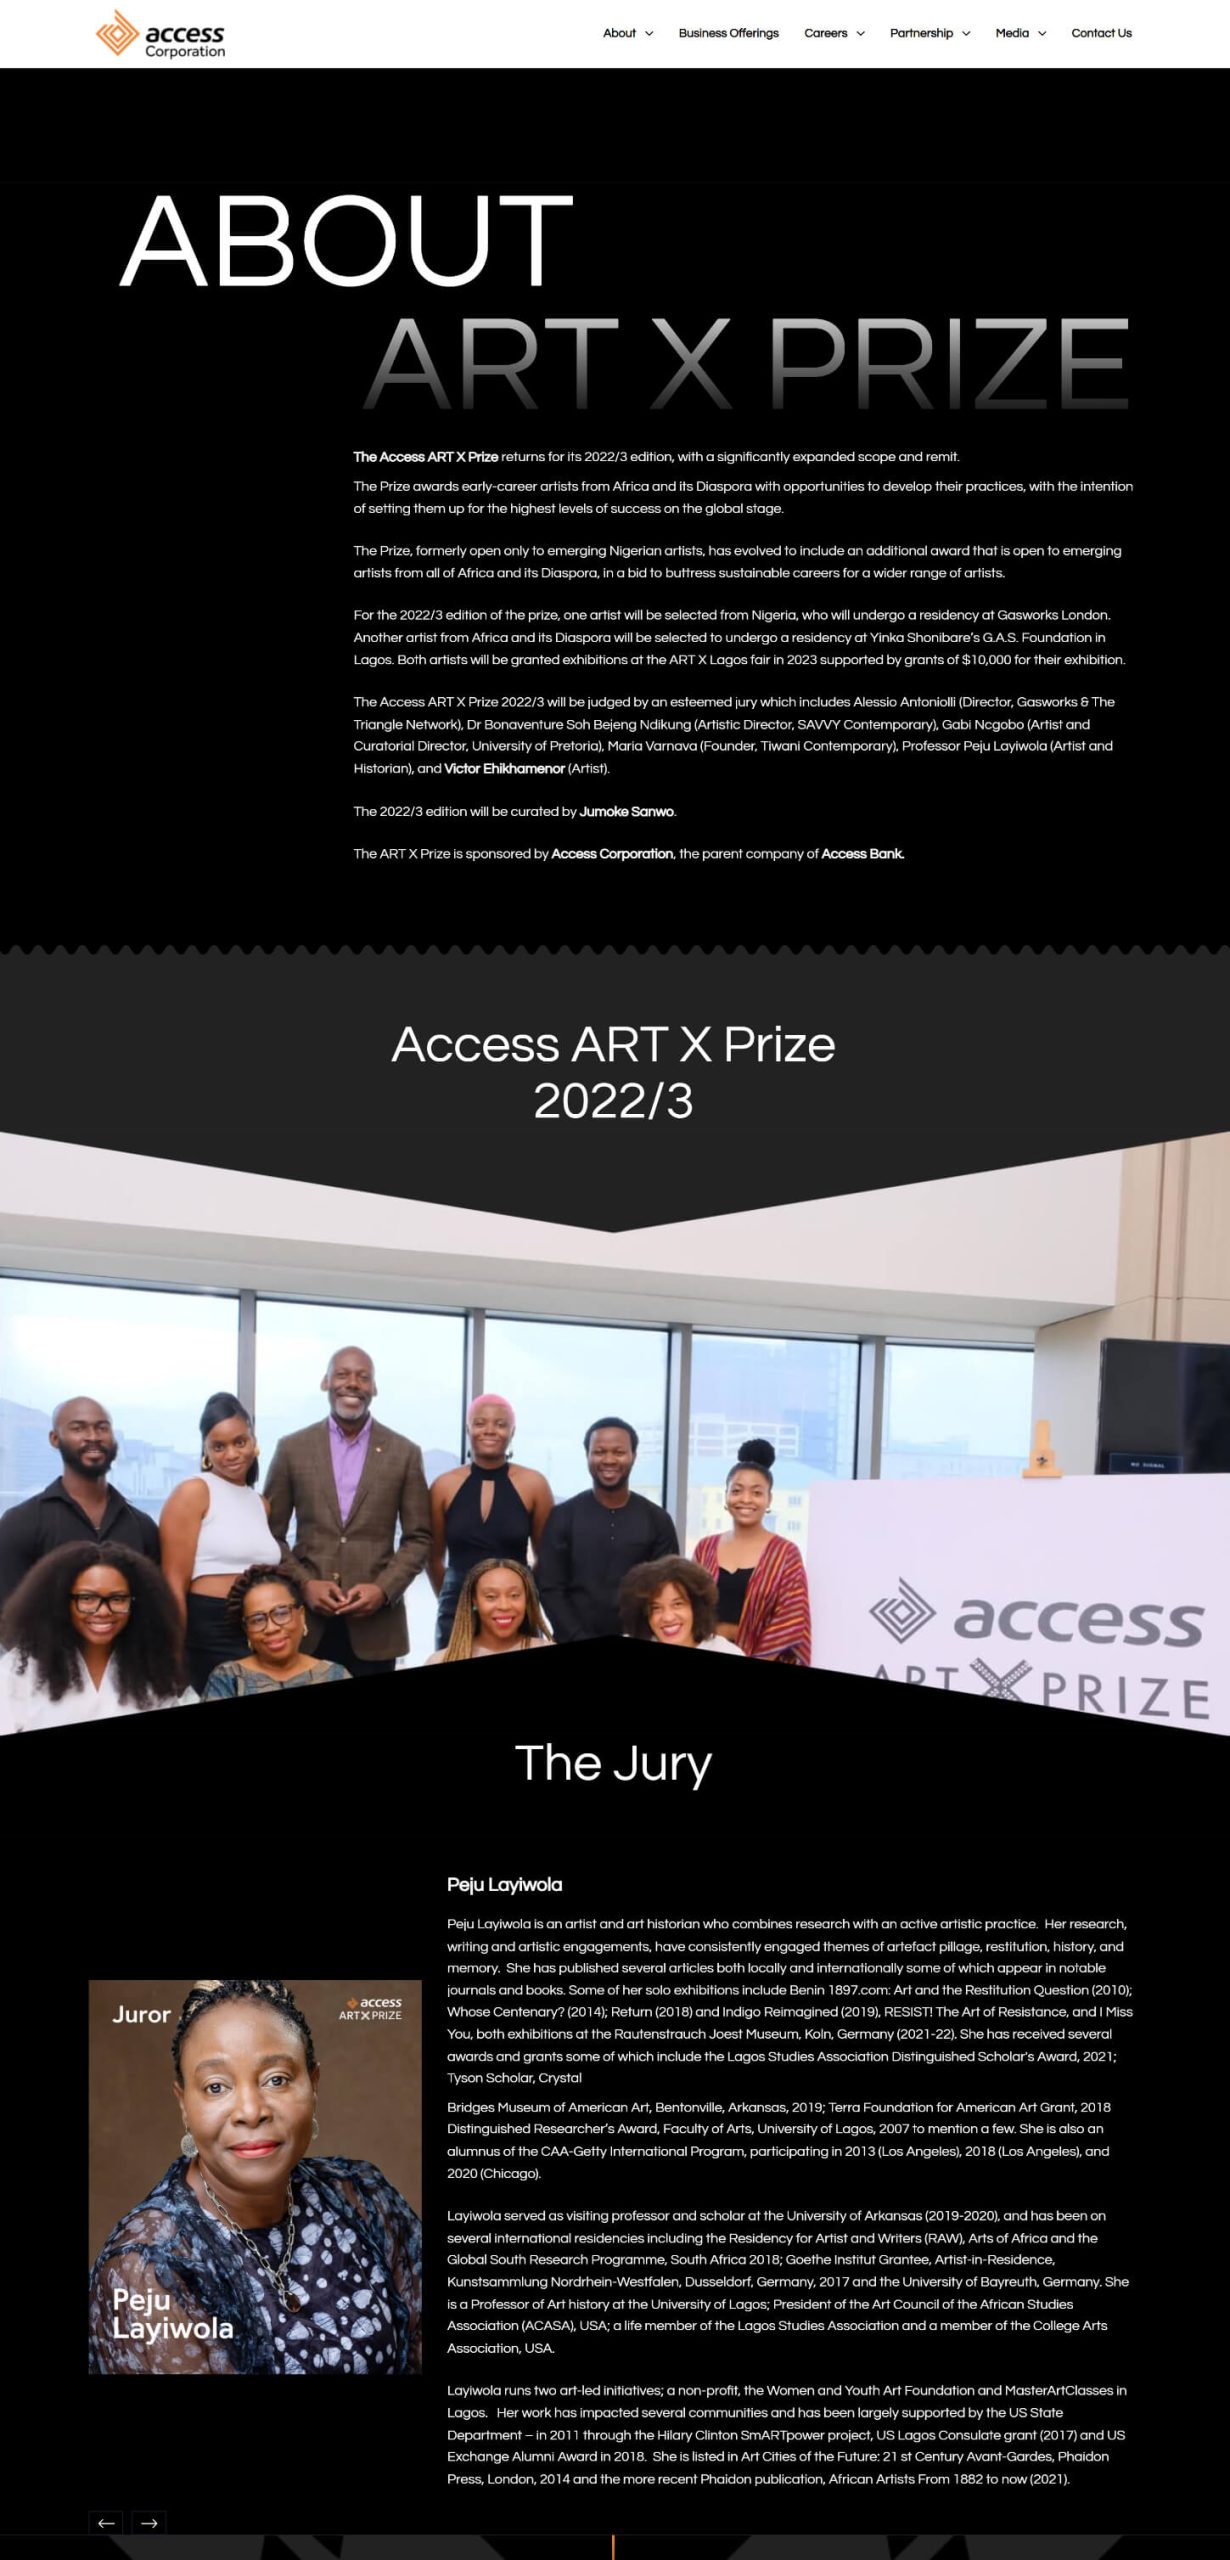 Art X Prize - The Access Corporation - Nativebrands Digital Agency